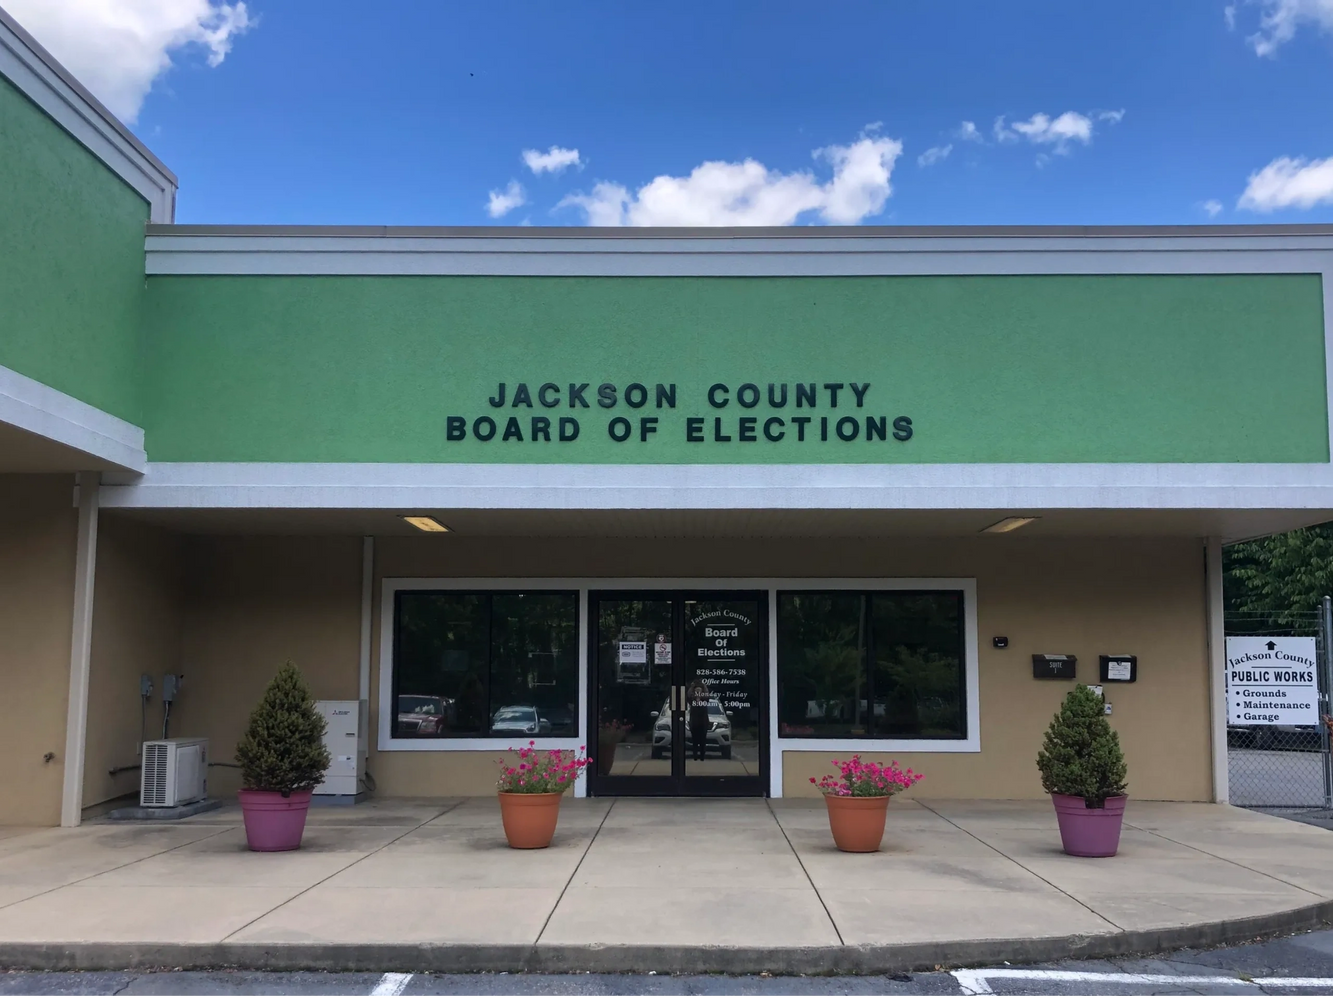 Photo  of Jackson County Board of Elections building facade